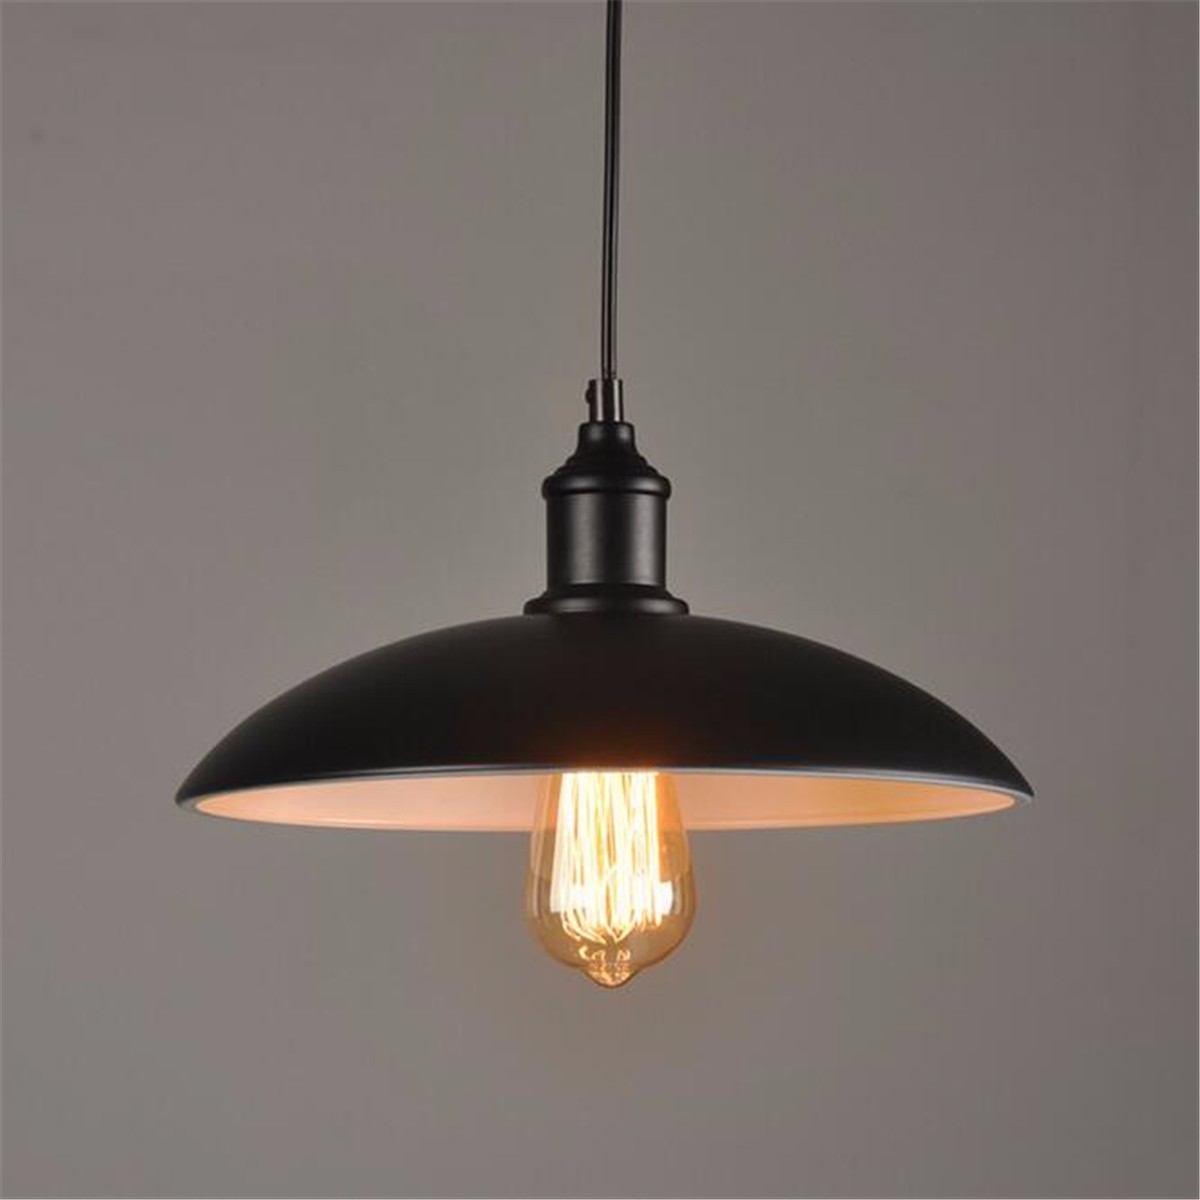 Vintage-Home-Room-Ceiling-Light-Pendant-Lamp-Fixture-Chandelier-E27-Bulb-Lampshade-Decor-1118064-6